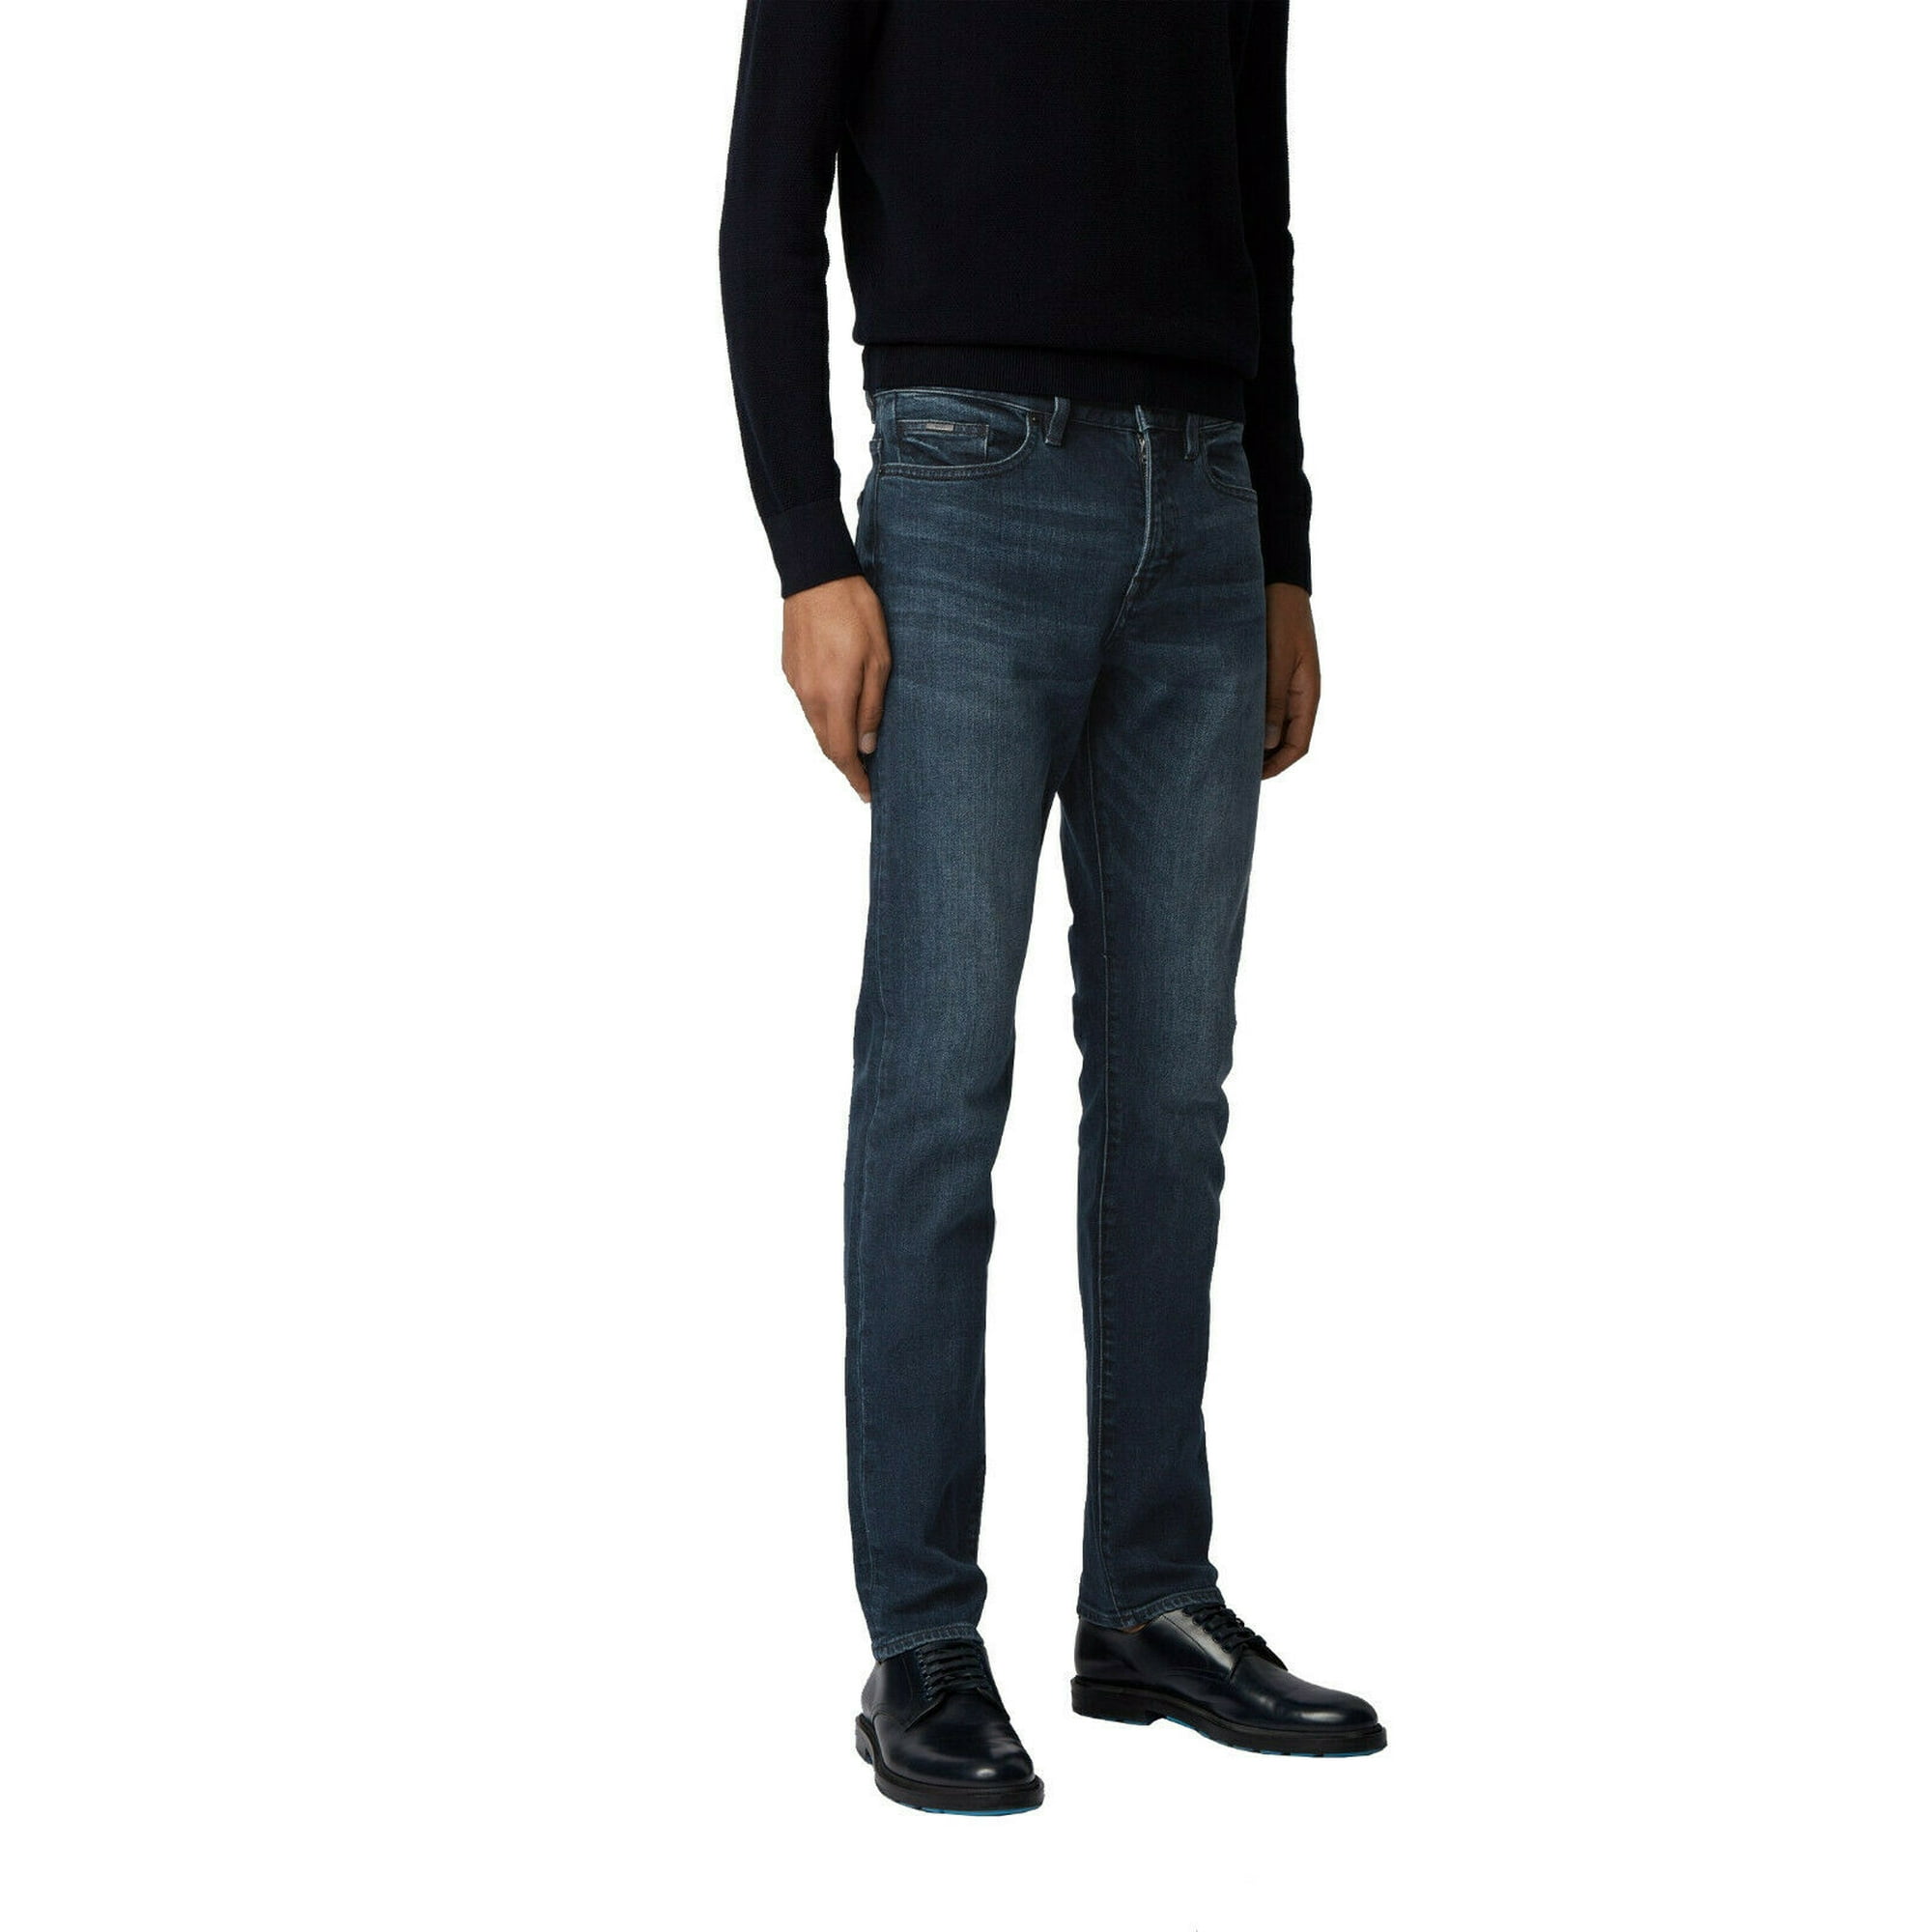 Boss Hugo Boss Delaware Slim Fit Jeans, Navy, 36W x 32L (5179-10) - Walmart.com